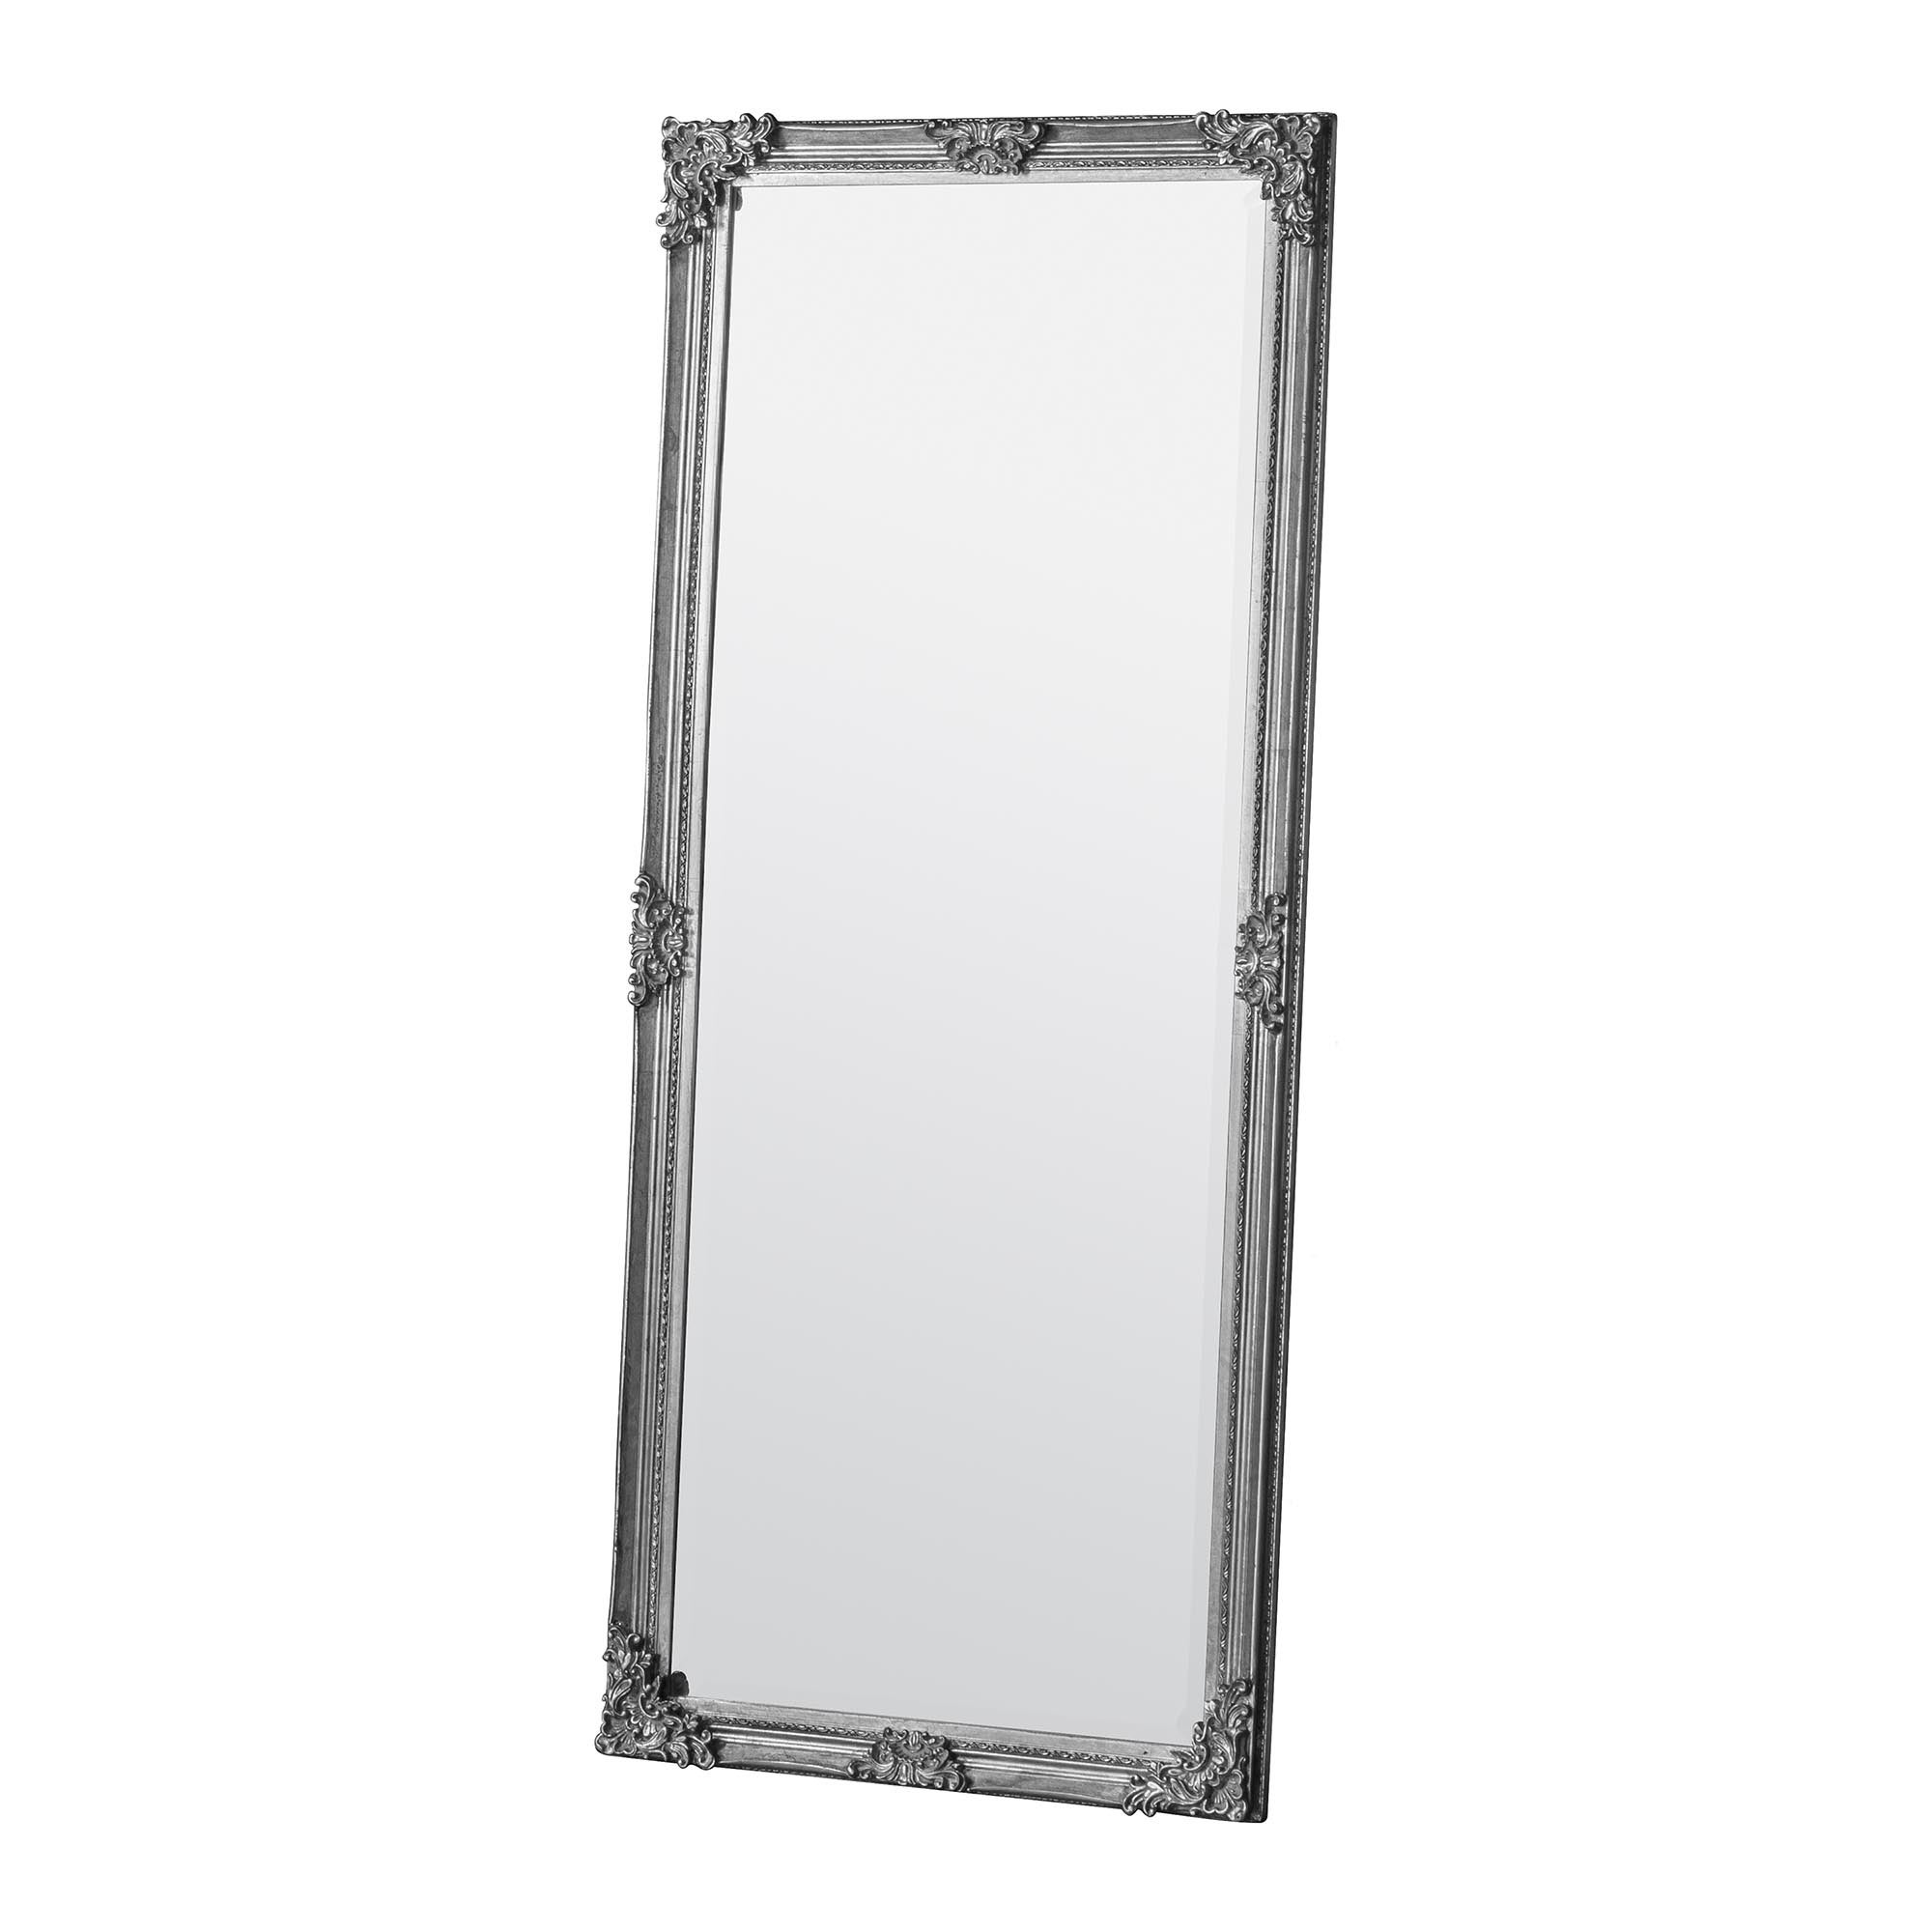 Rociada Leaner Mirror 70x160cm Silver